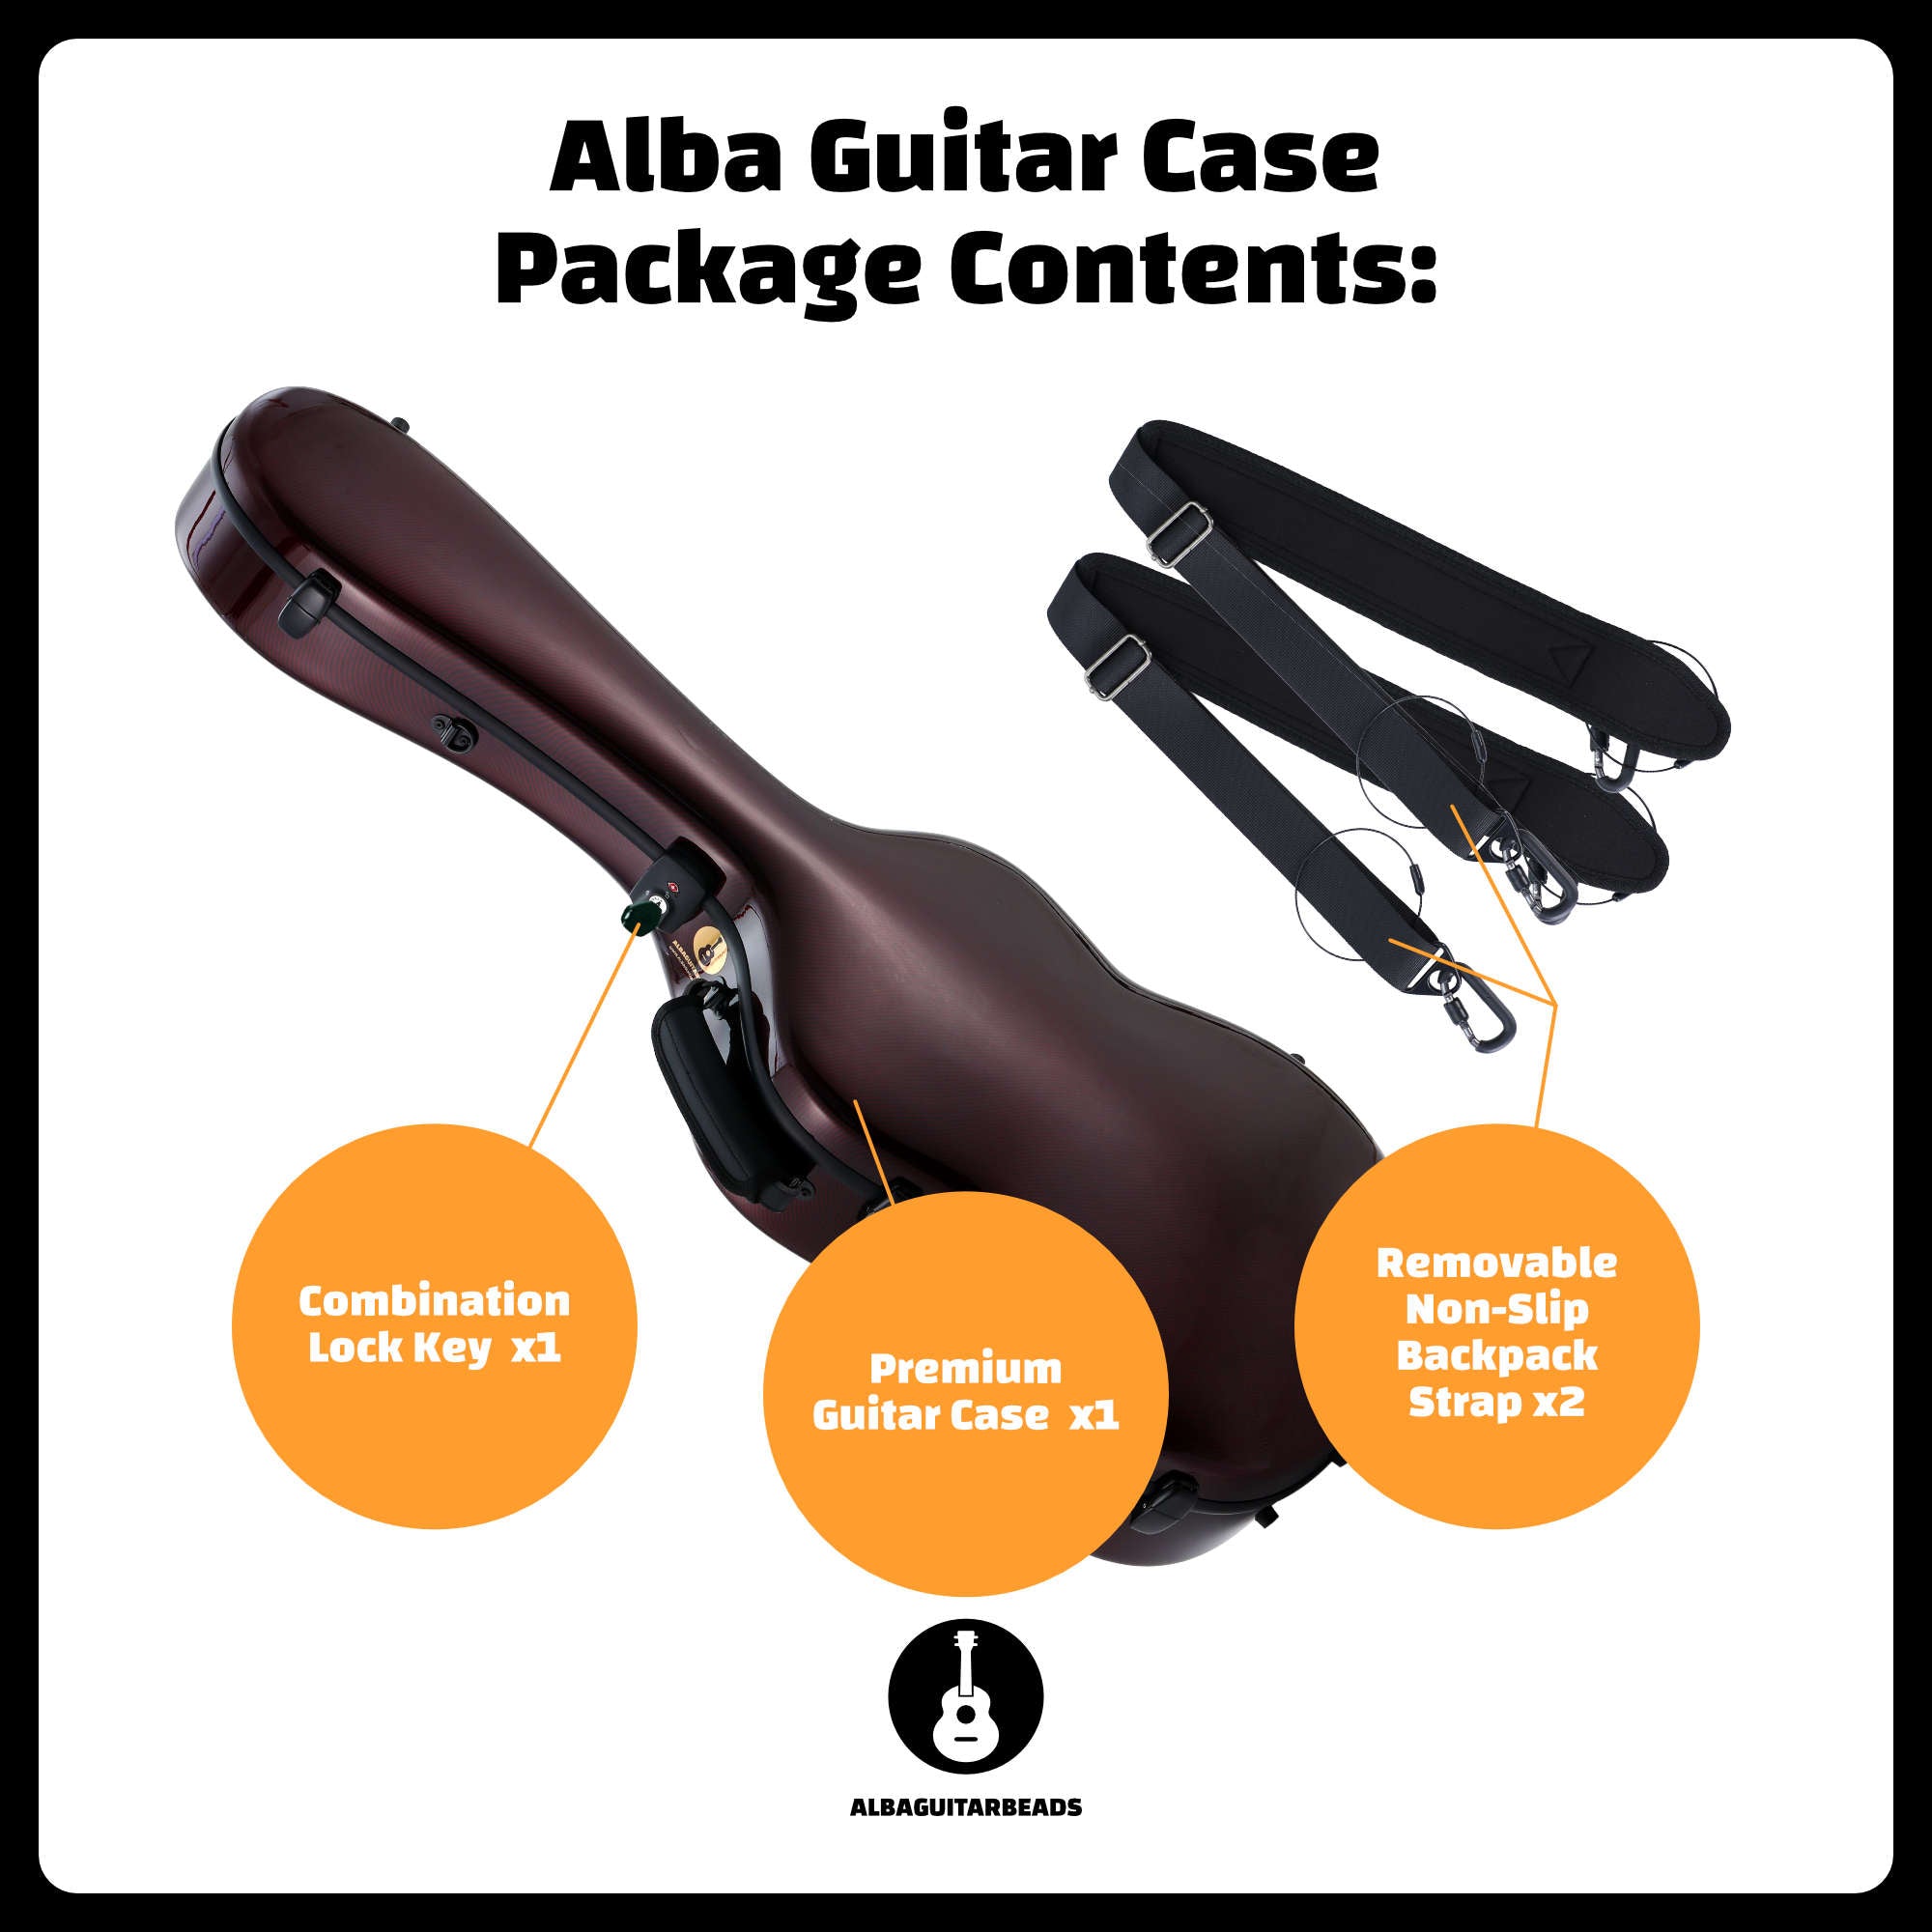 Alba Guitar Beads Case Burgundy Carbon Pattern Gloss for Classical Guitar Acoustic, Flamenco guitar case